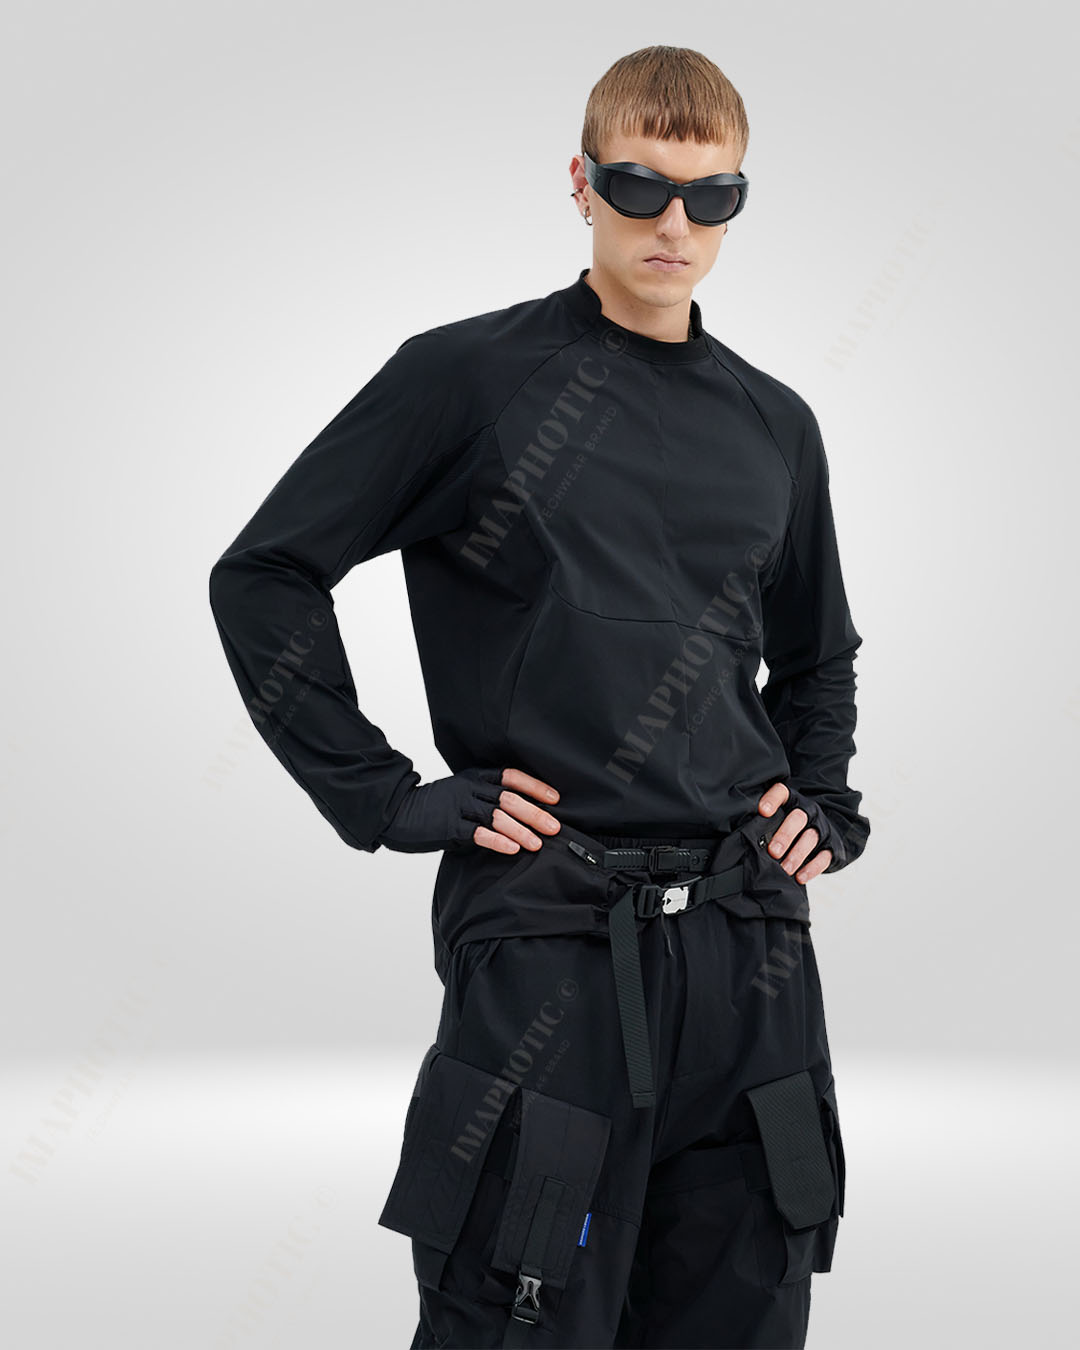 Urban Edge Tactical Raglan Sweatshirt | Modern Black Attire